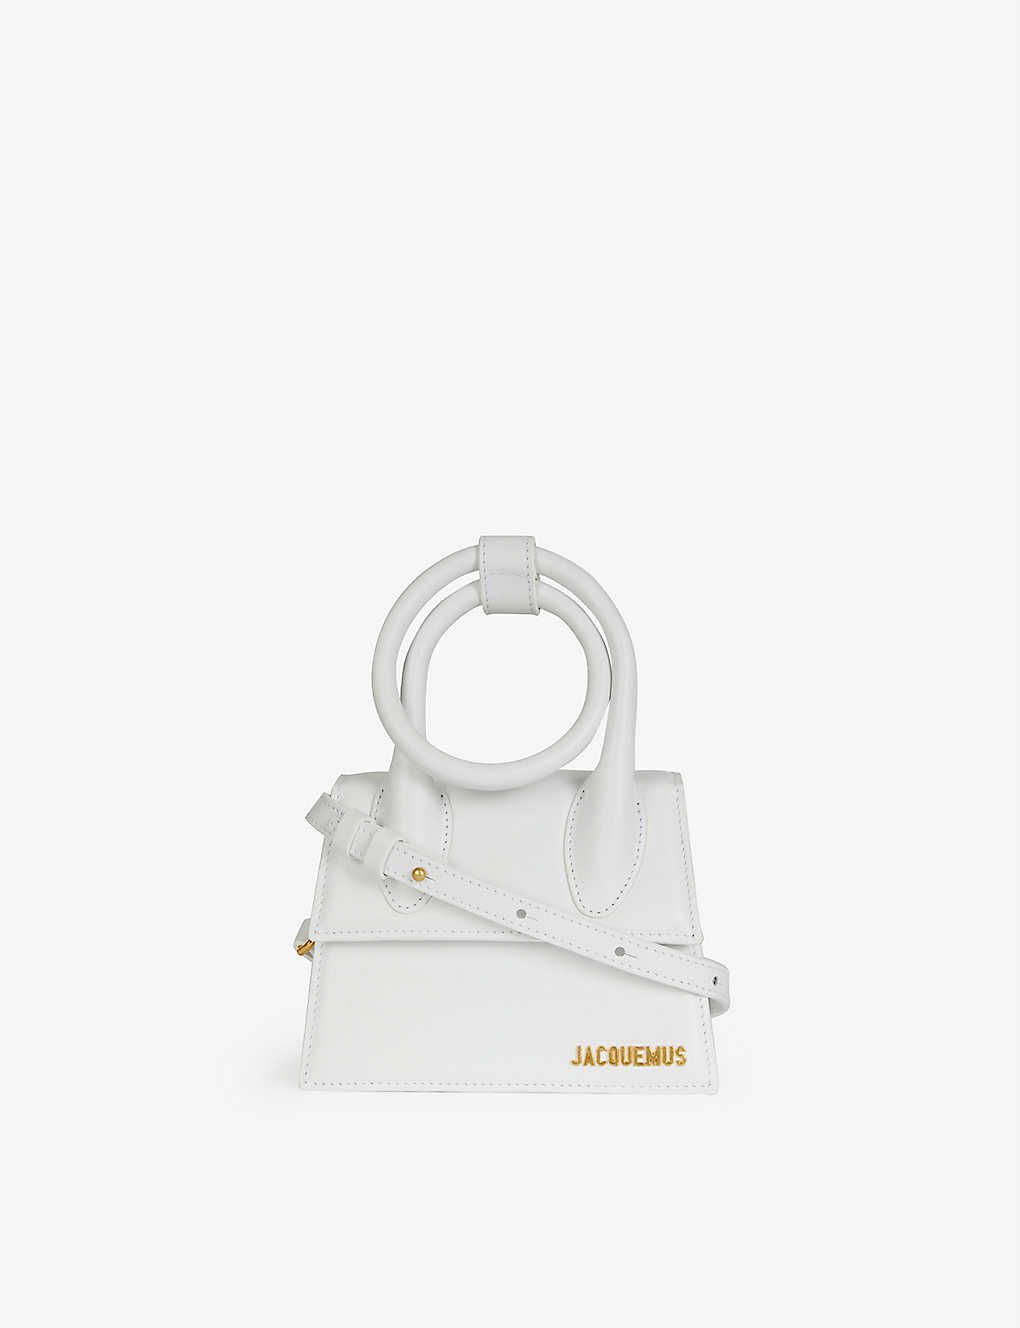 JACQUEMUS Le Chiquito Noeud medium leather top-handle bag | Selfridges